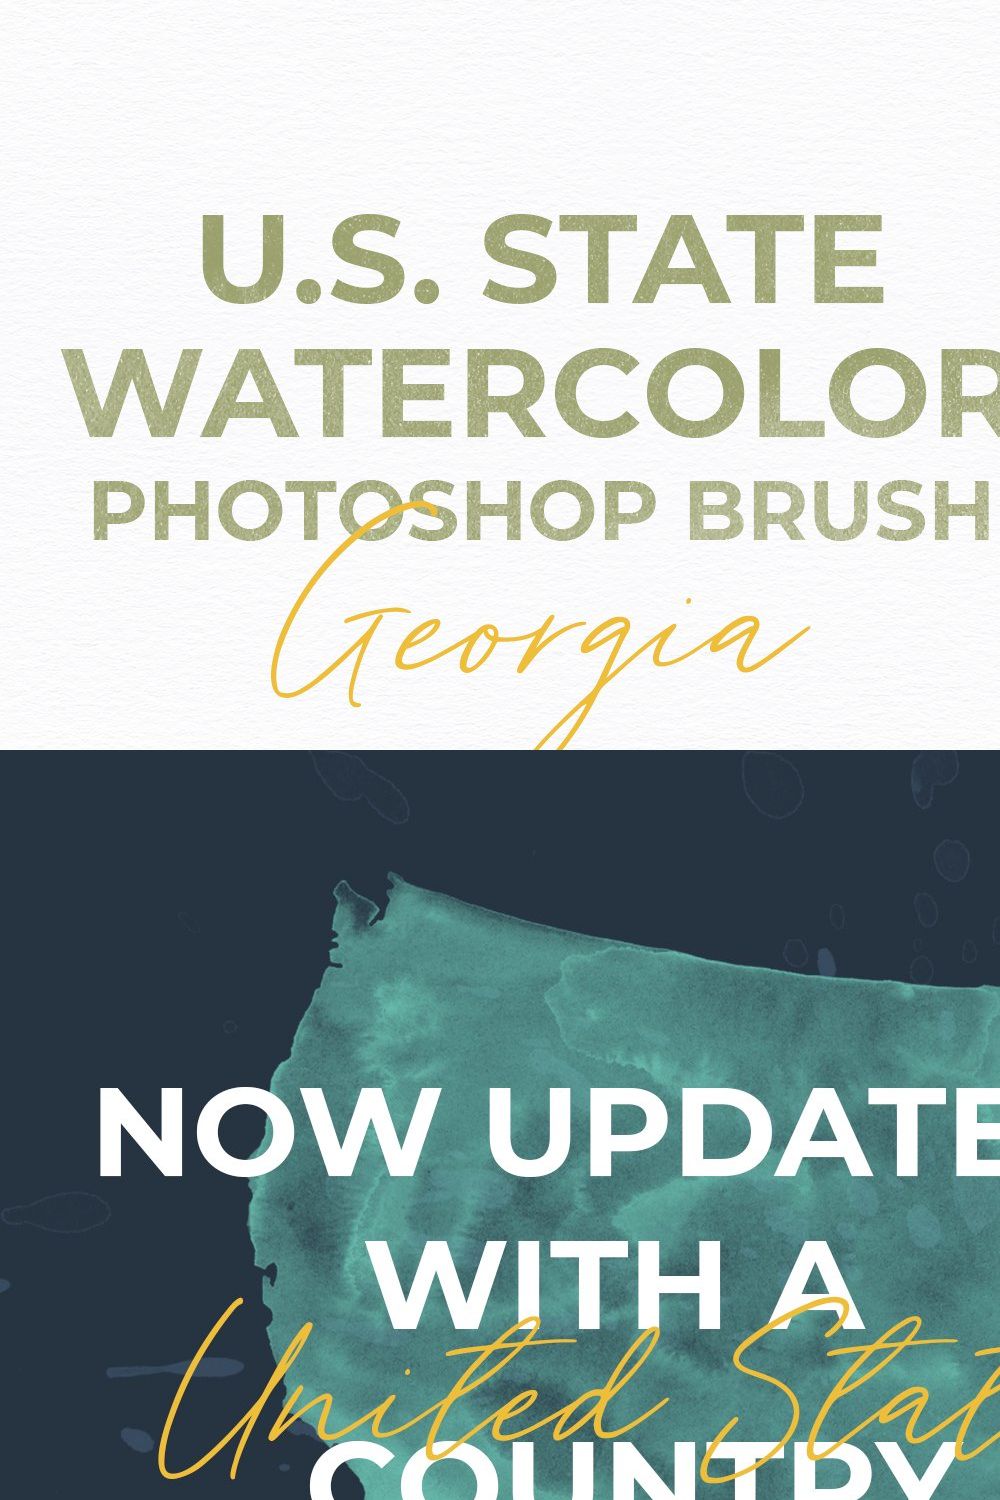 Georgia US Watercolor PS Brush pinterest preview image.